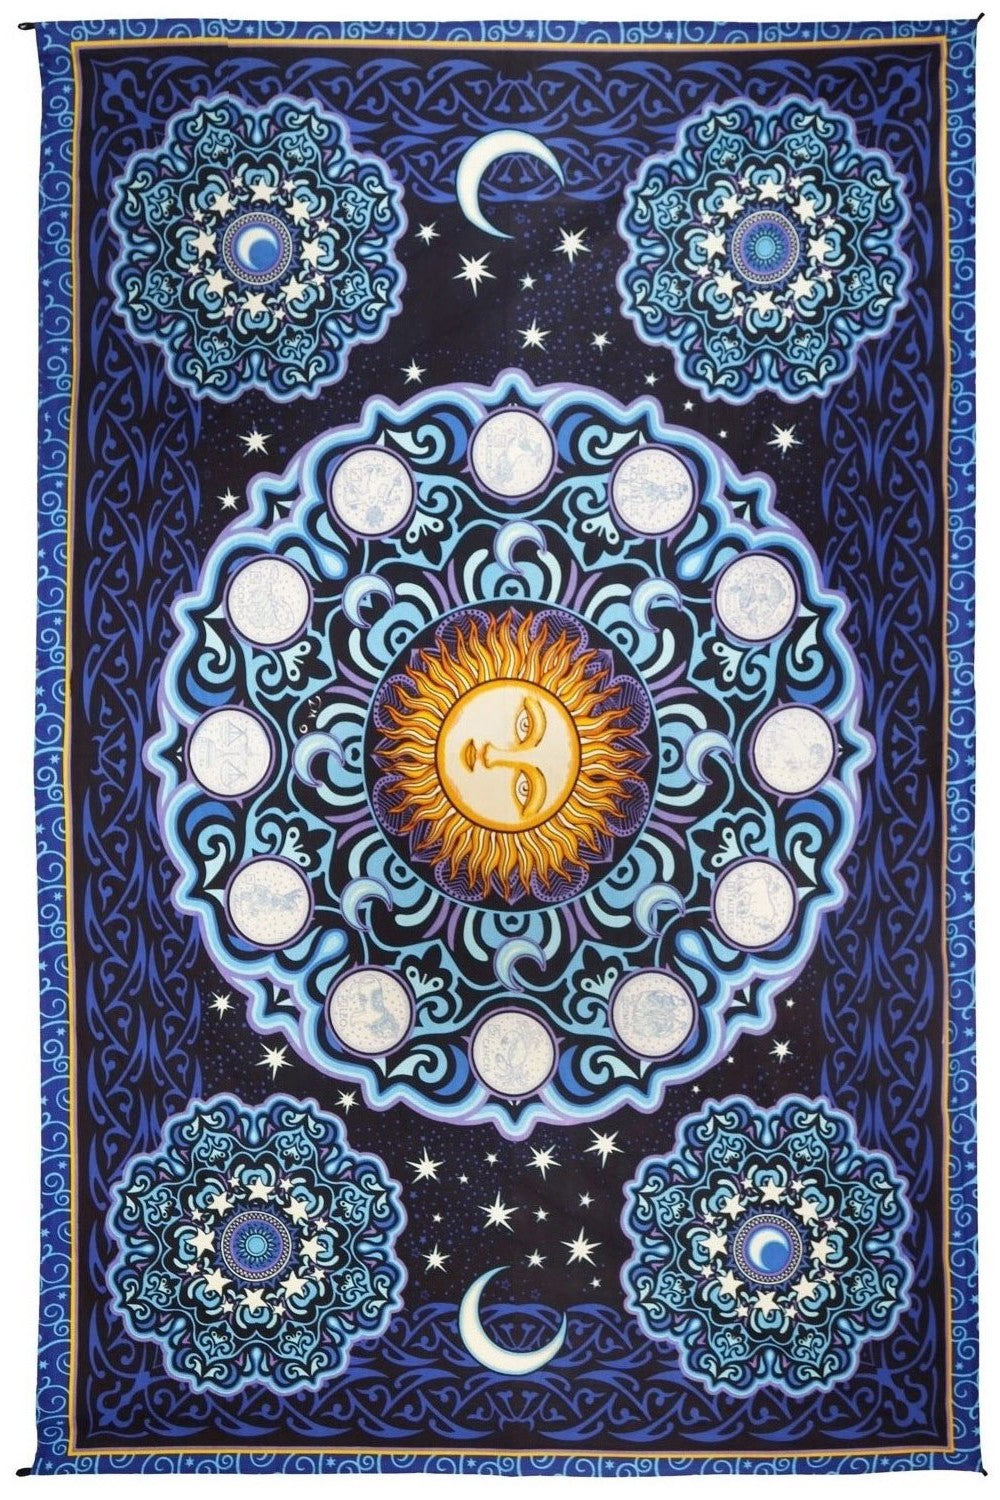 3D Dan Morris Zodiac Tapestry 60x90